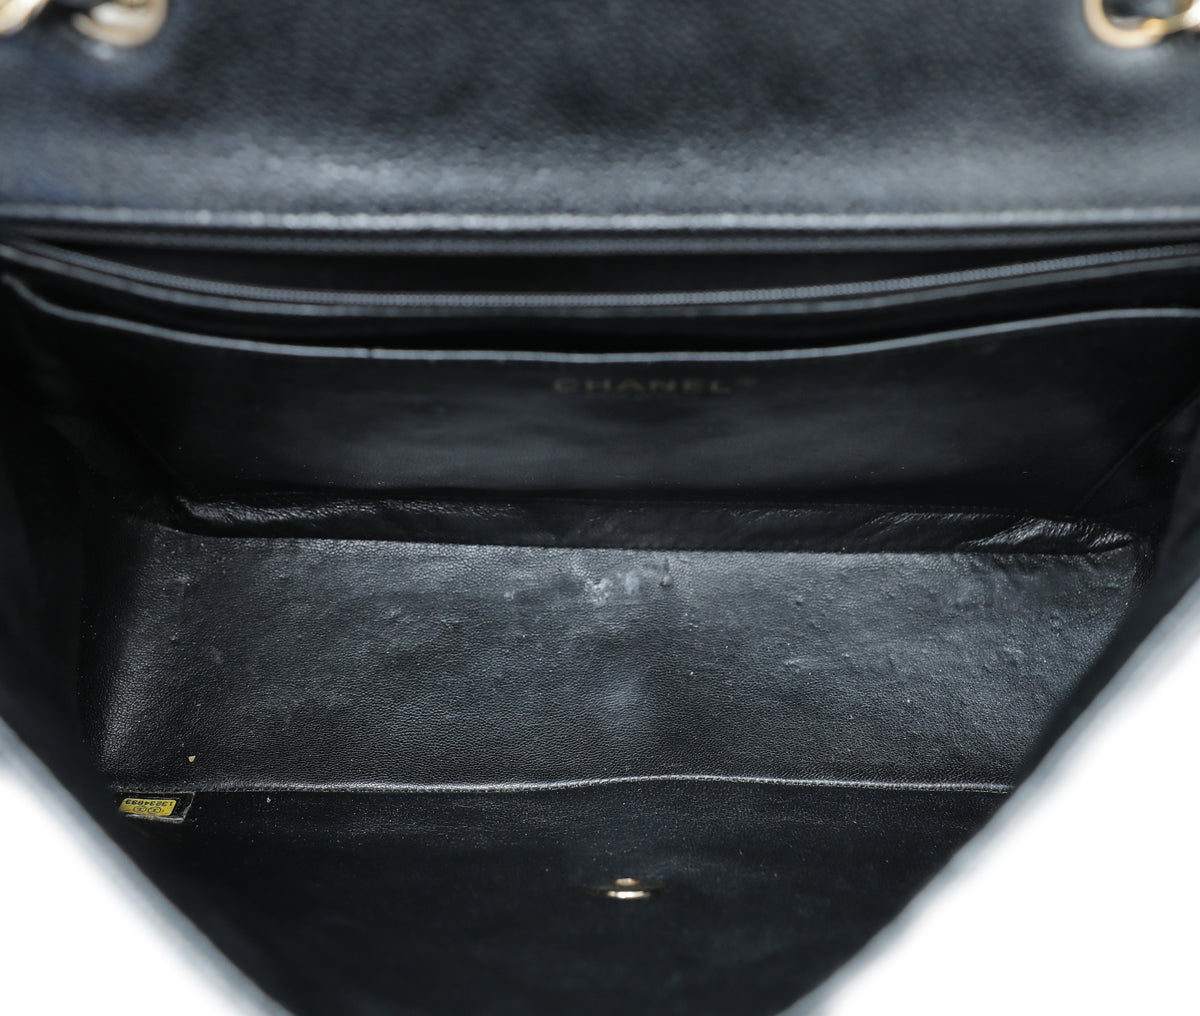 Chanel Black CC Classic Single Flap Jumbo Bag